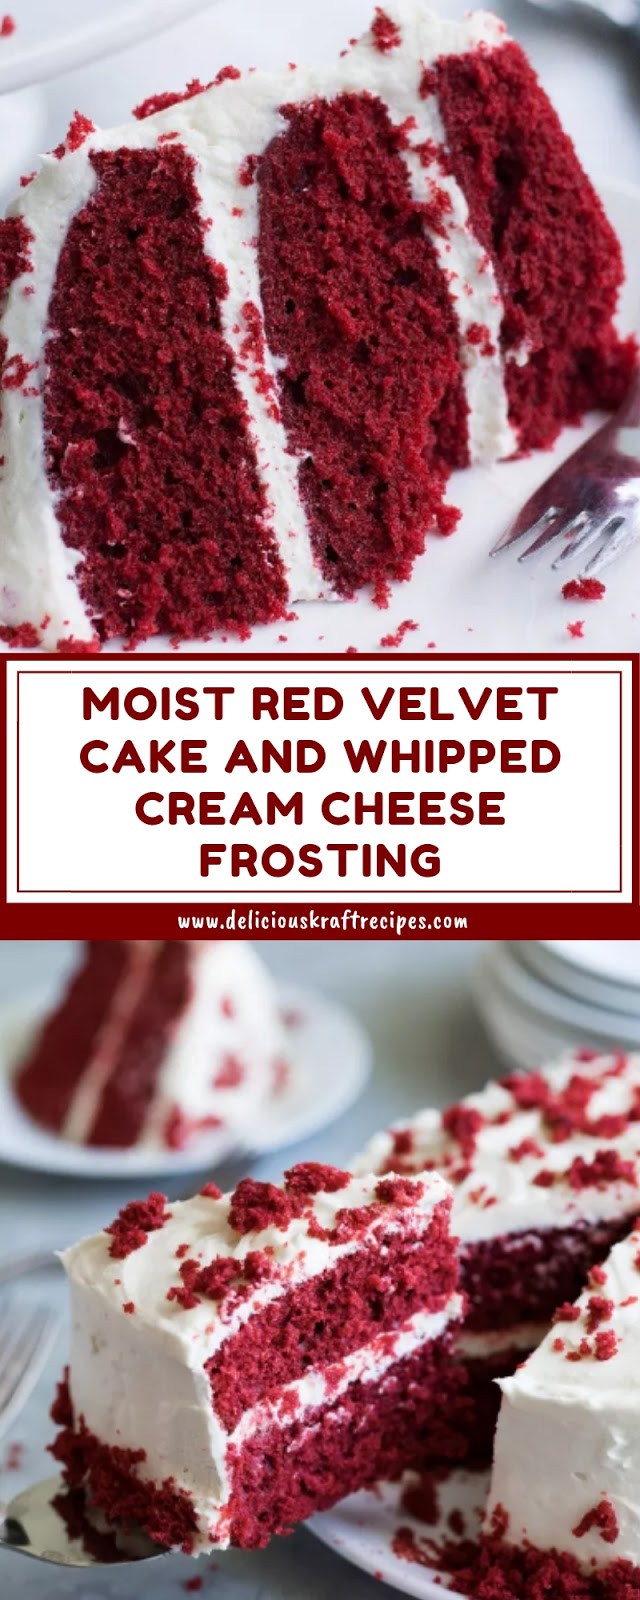 MOIST RED VELVET CAKE AND WHIPPED CREAM CHEESE FROSTING 